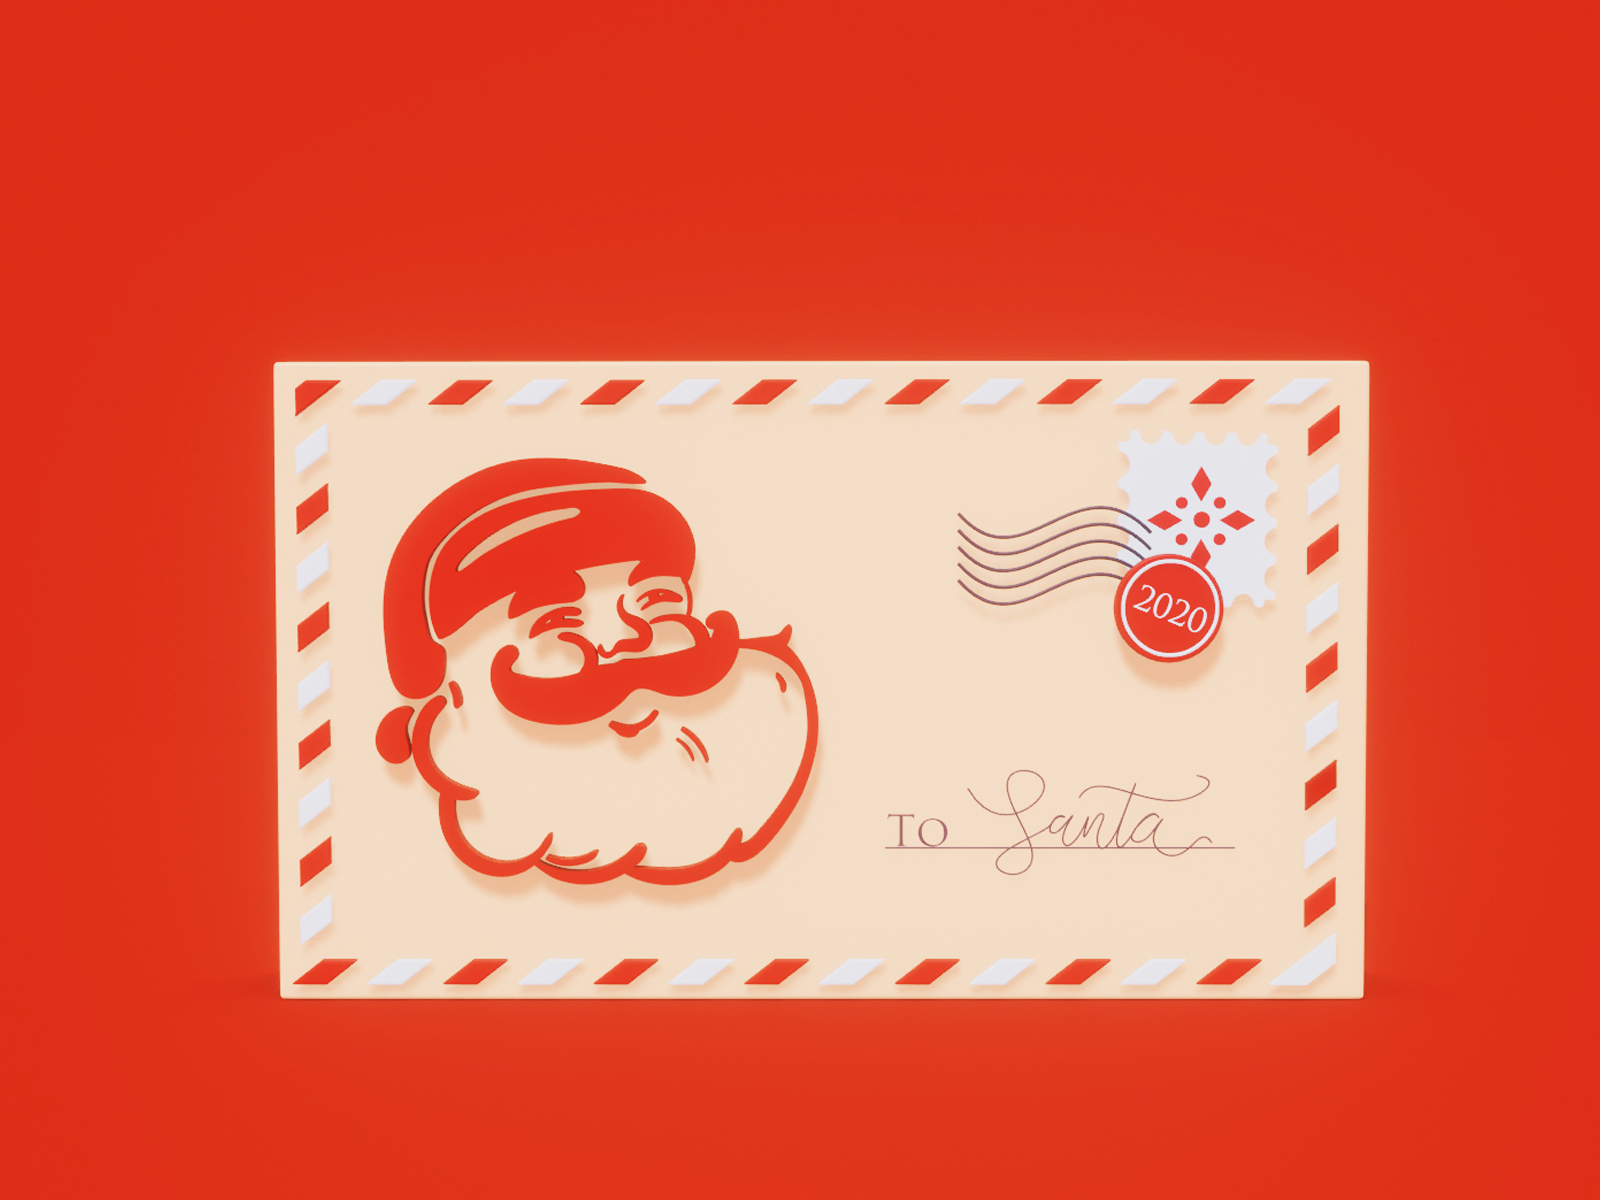 Letter to Santa by Olga Deeva on Dribbble